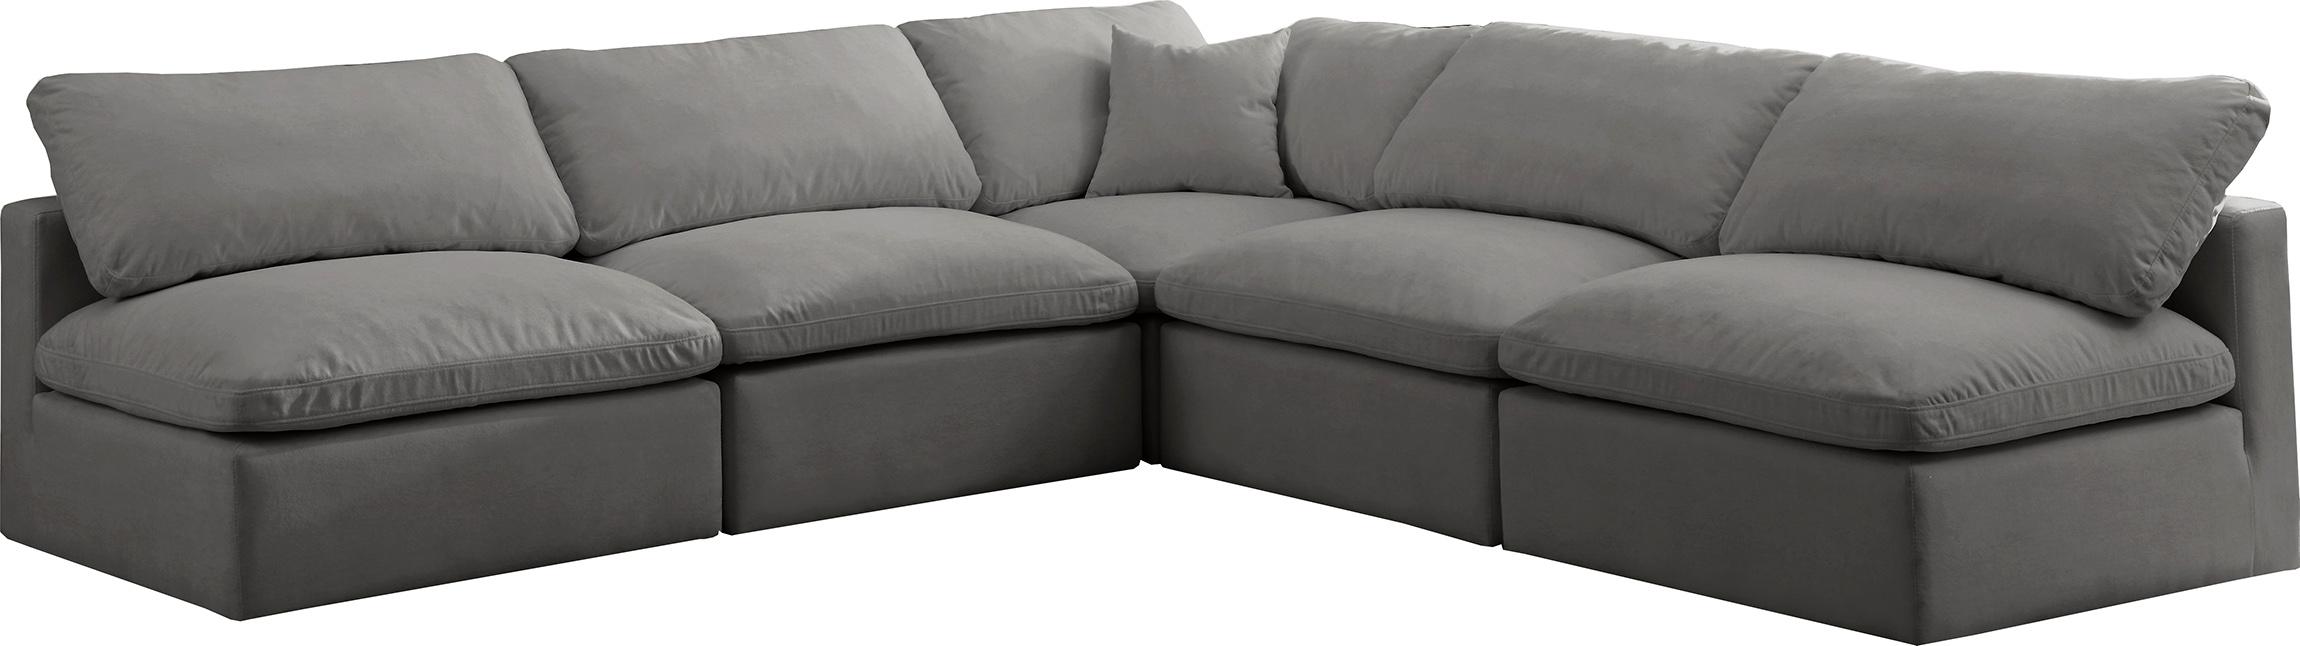 Contemporary, Modern Modular Sectional Sofa 602Grey-Sec5B 602Grey-Sec5B in Gray Fabric